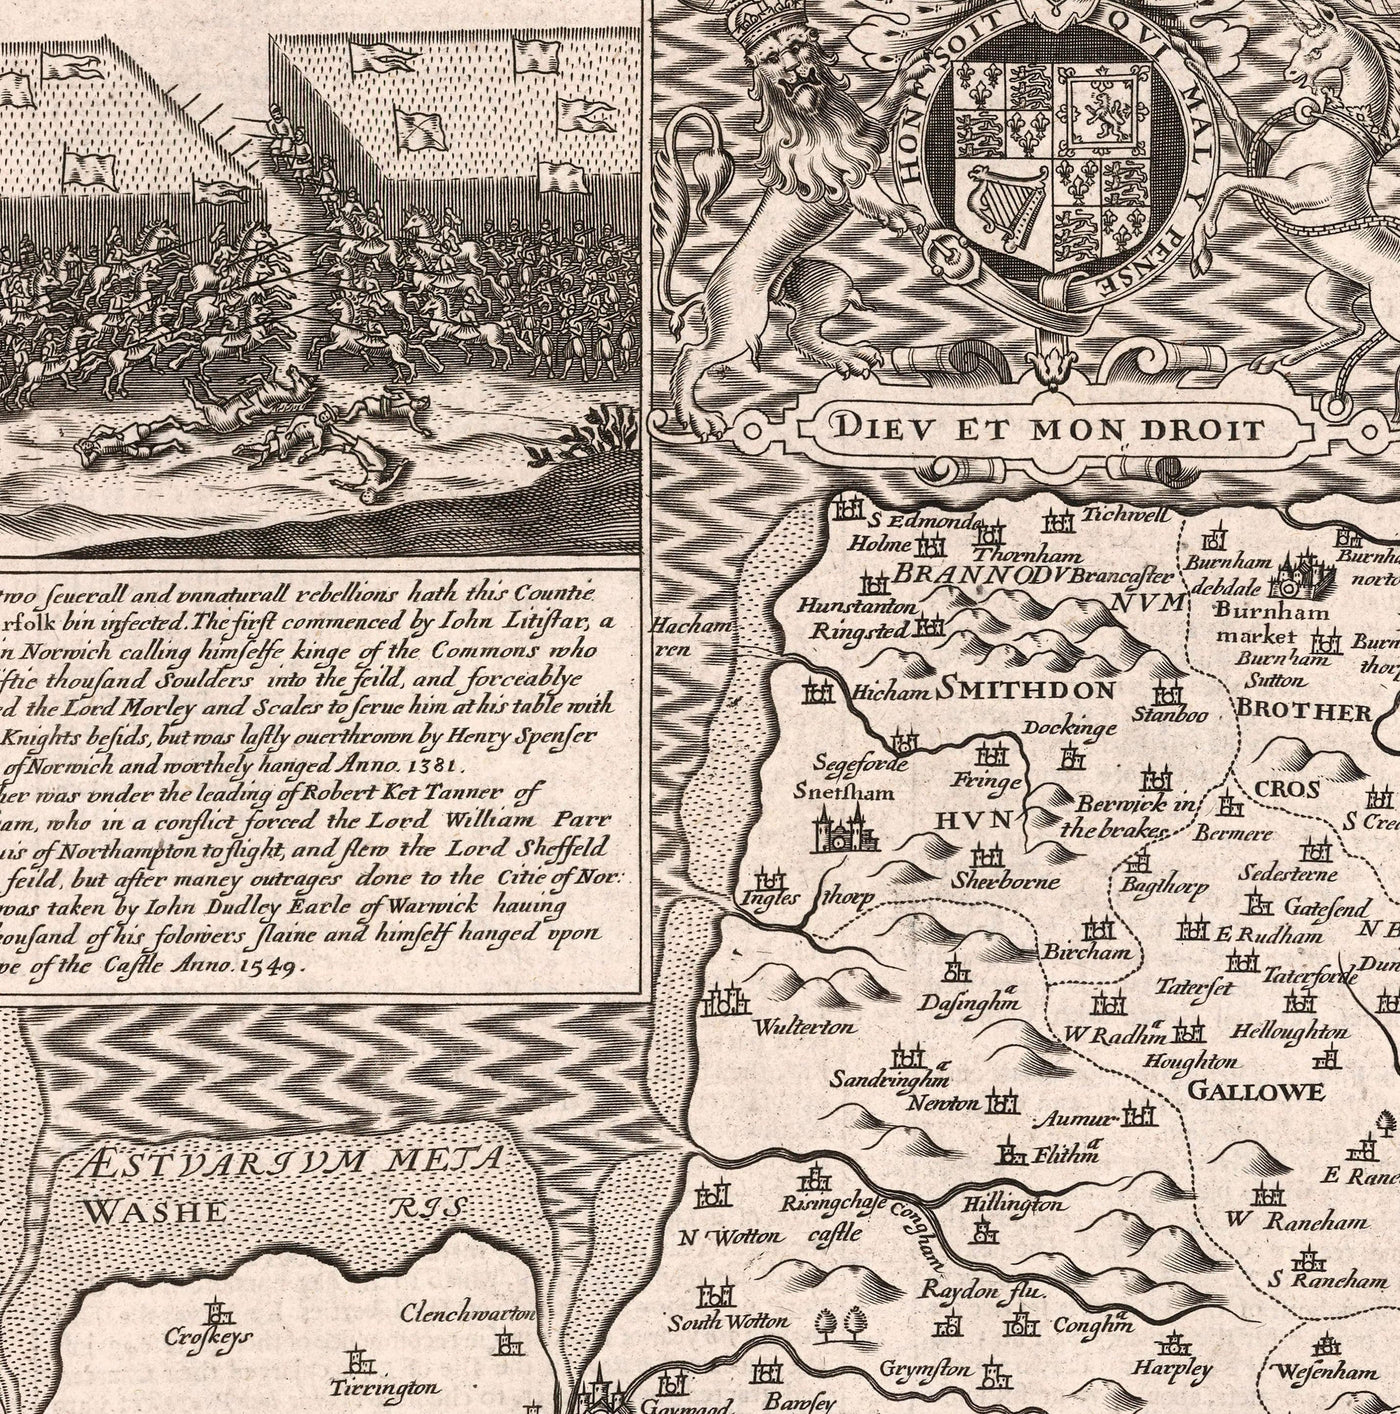 Old Map of Norfolk, 1611 by John Speed - Norwich, Great Yarmouth, King's Lynn, Thetford, Fakenham